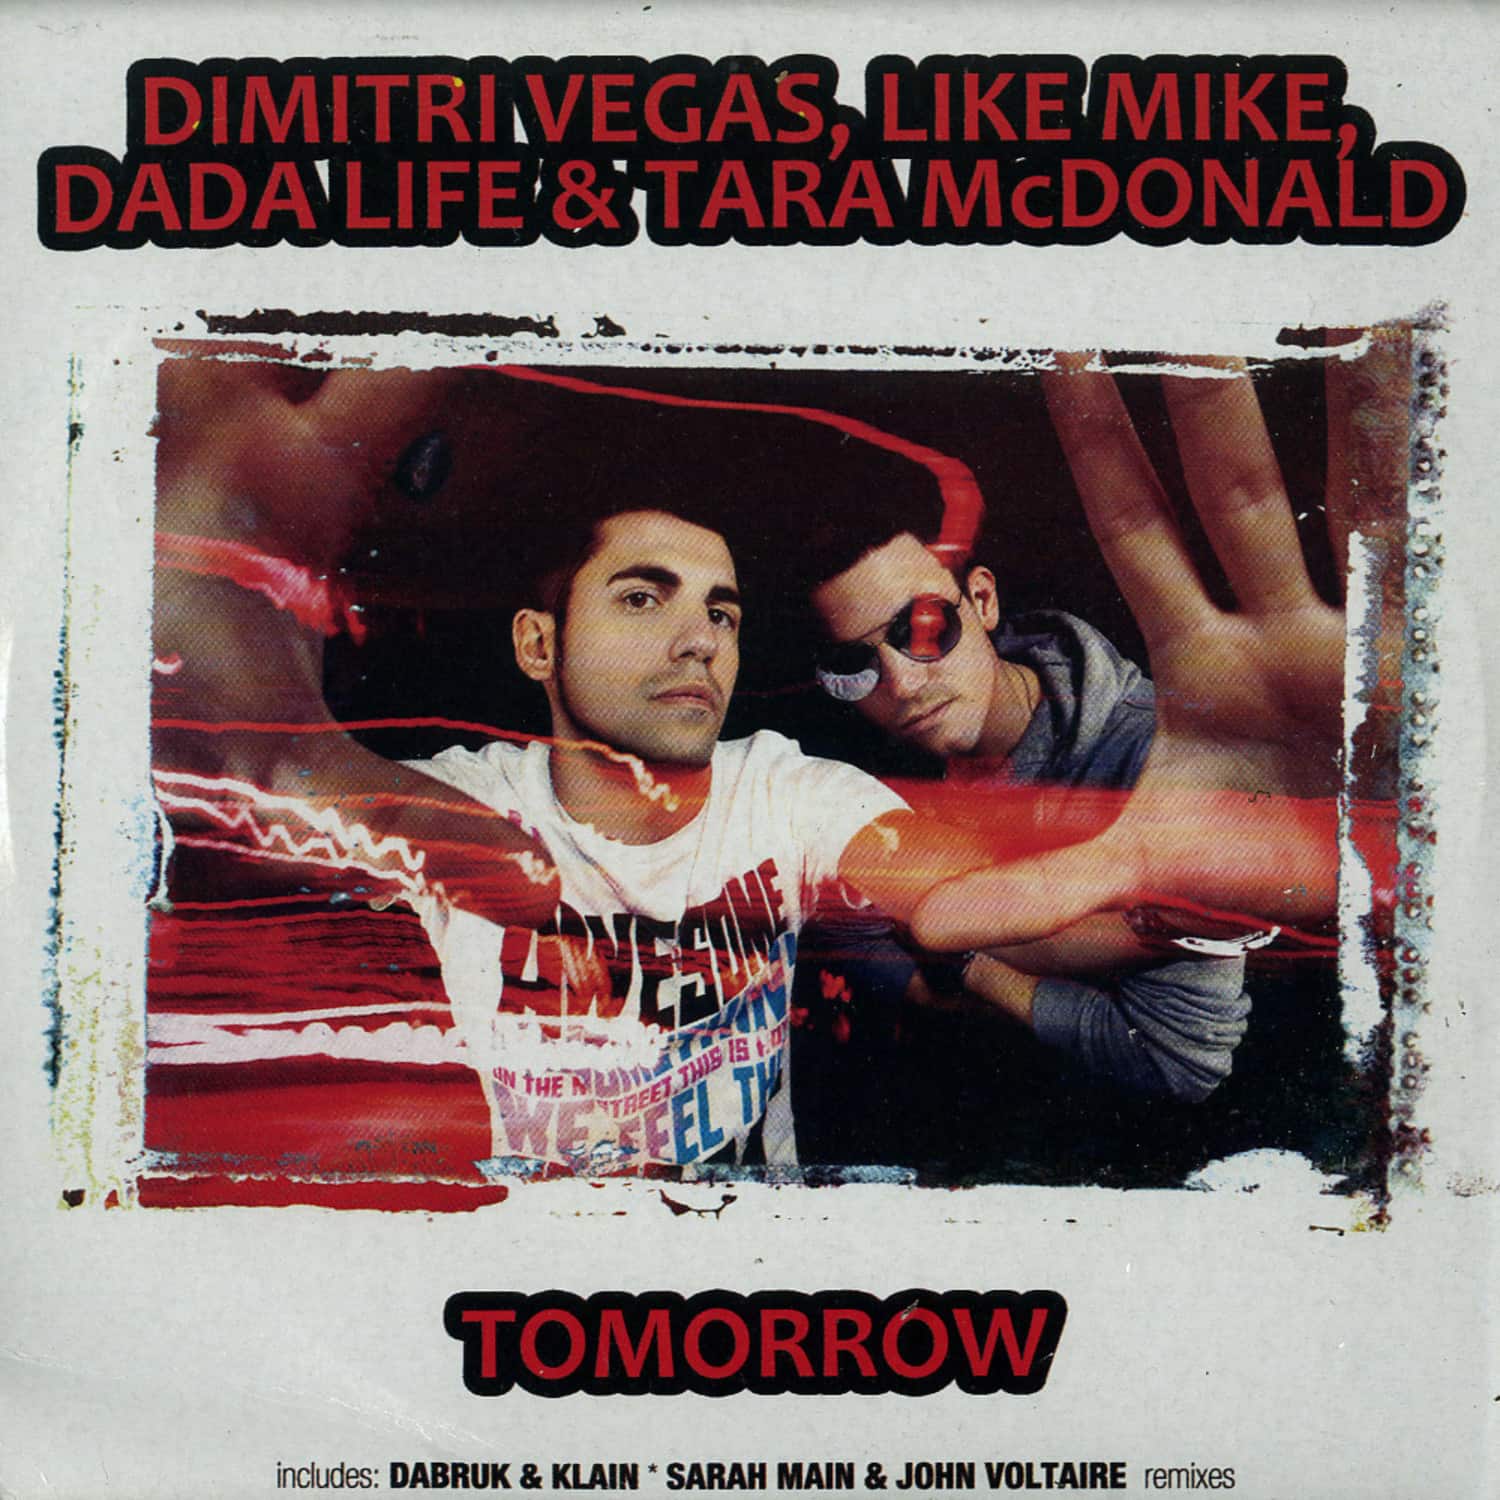 Dimitri Vegas, Like Mike, Dada Life, Tara McDonald - TOMORROW 